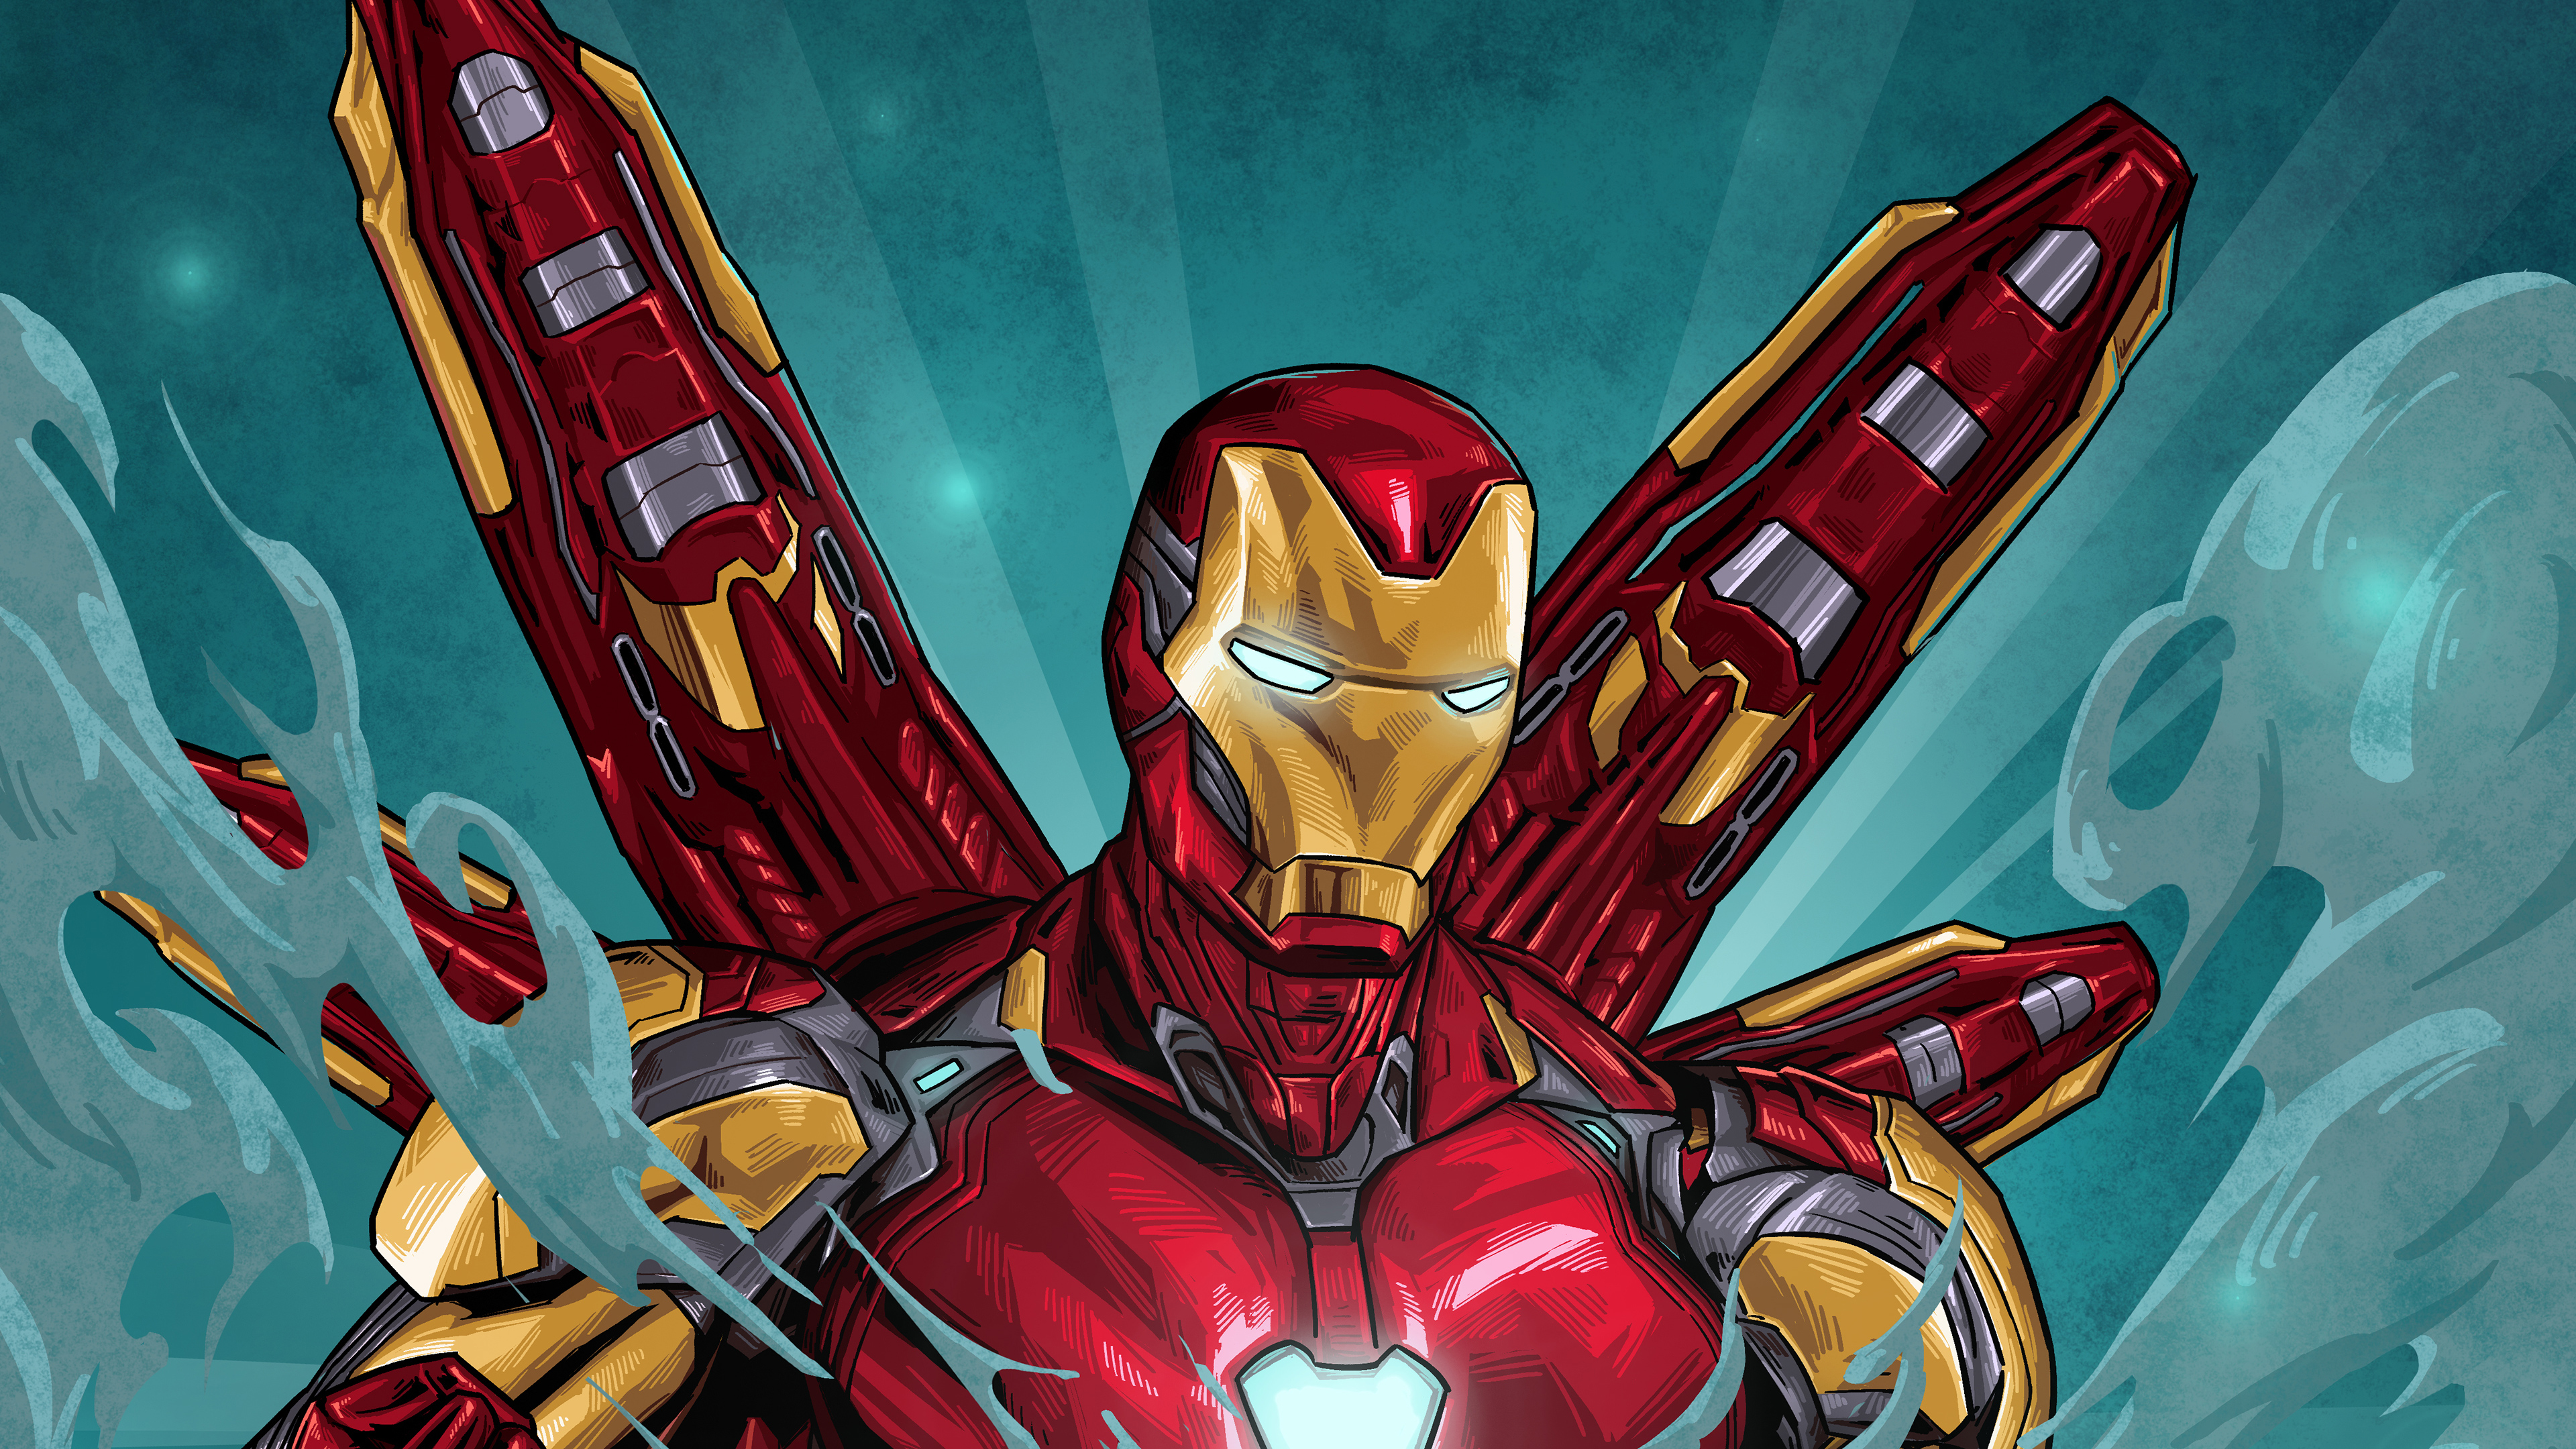 Iron Man Suit Art, HD Superheroes, 4k Wallpapers, Images ...